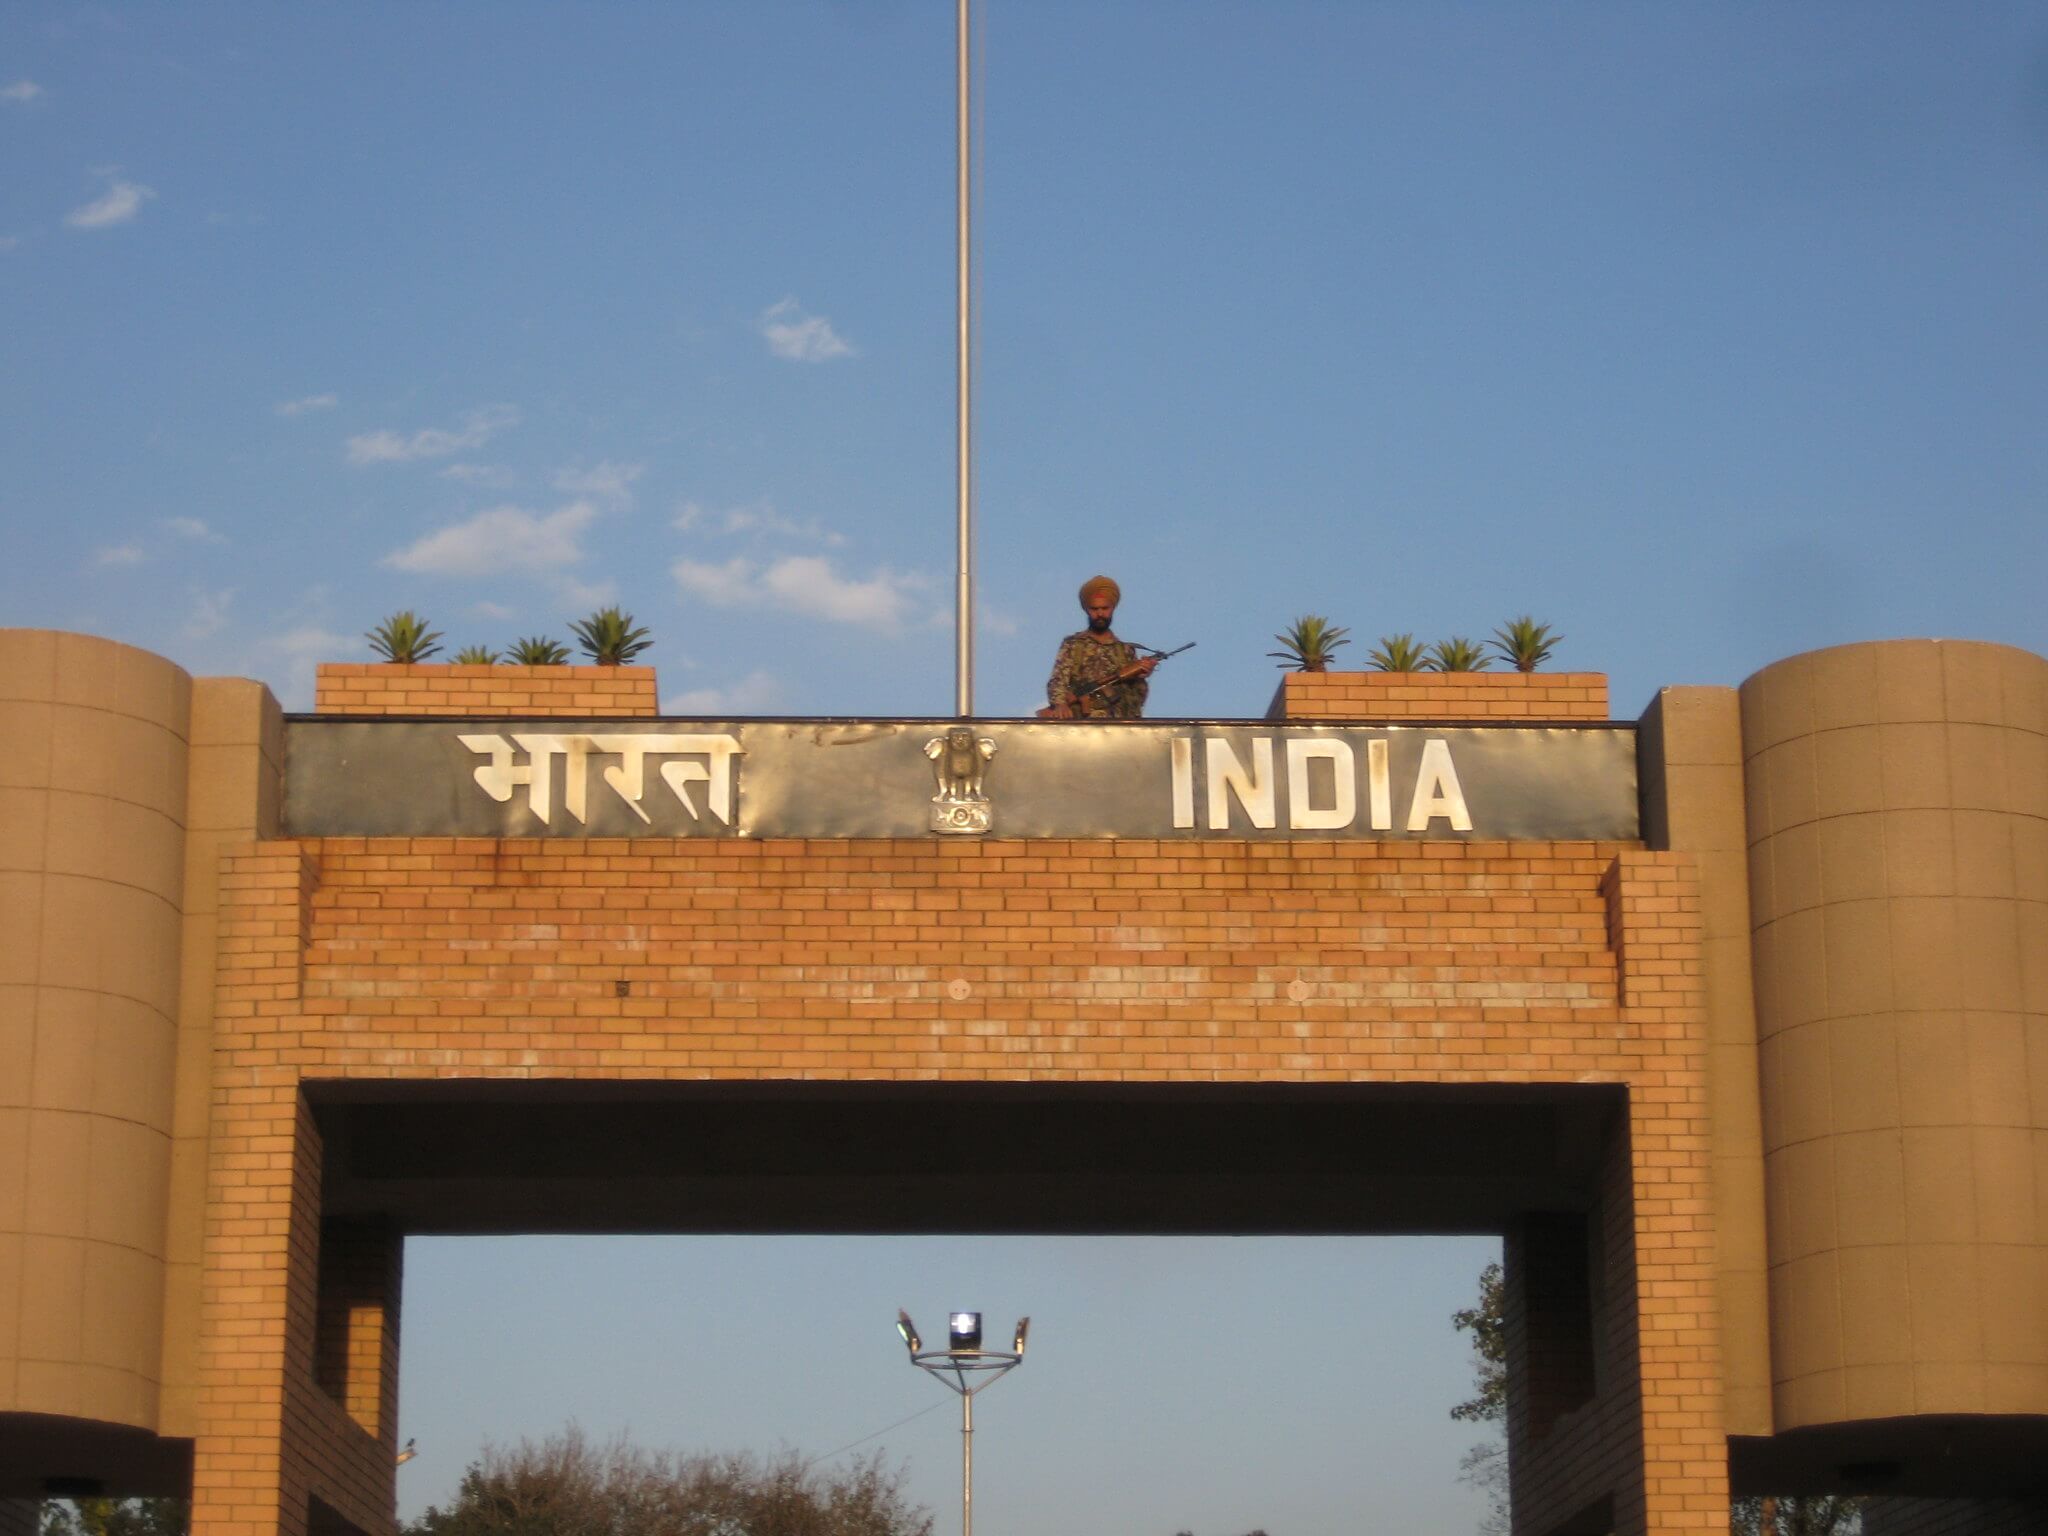 India-Pakistan border crossing in 2011. © Tjollans / Flickr